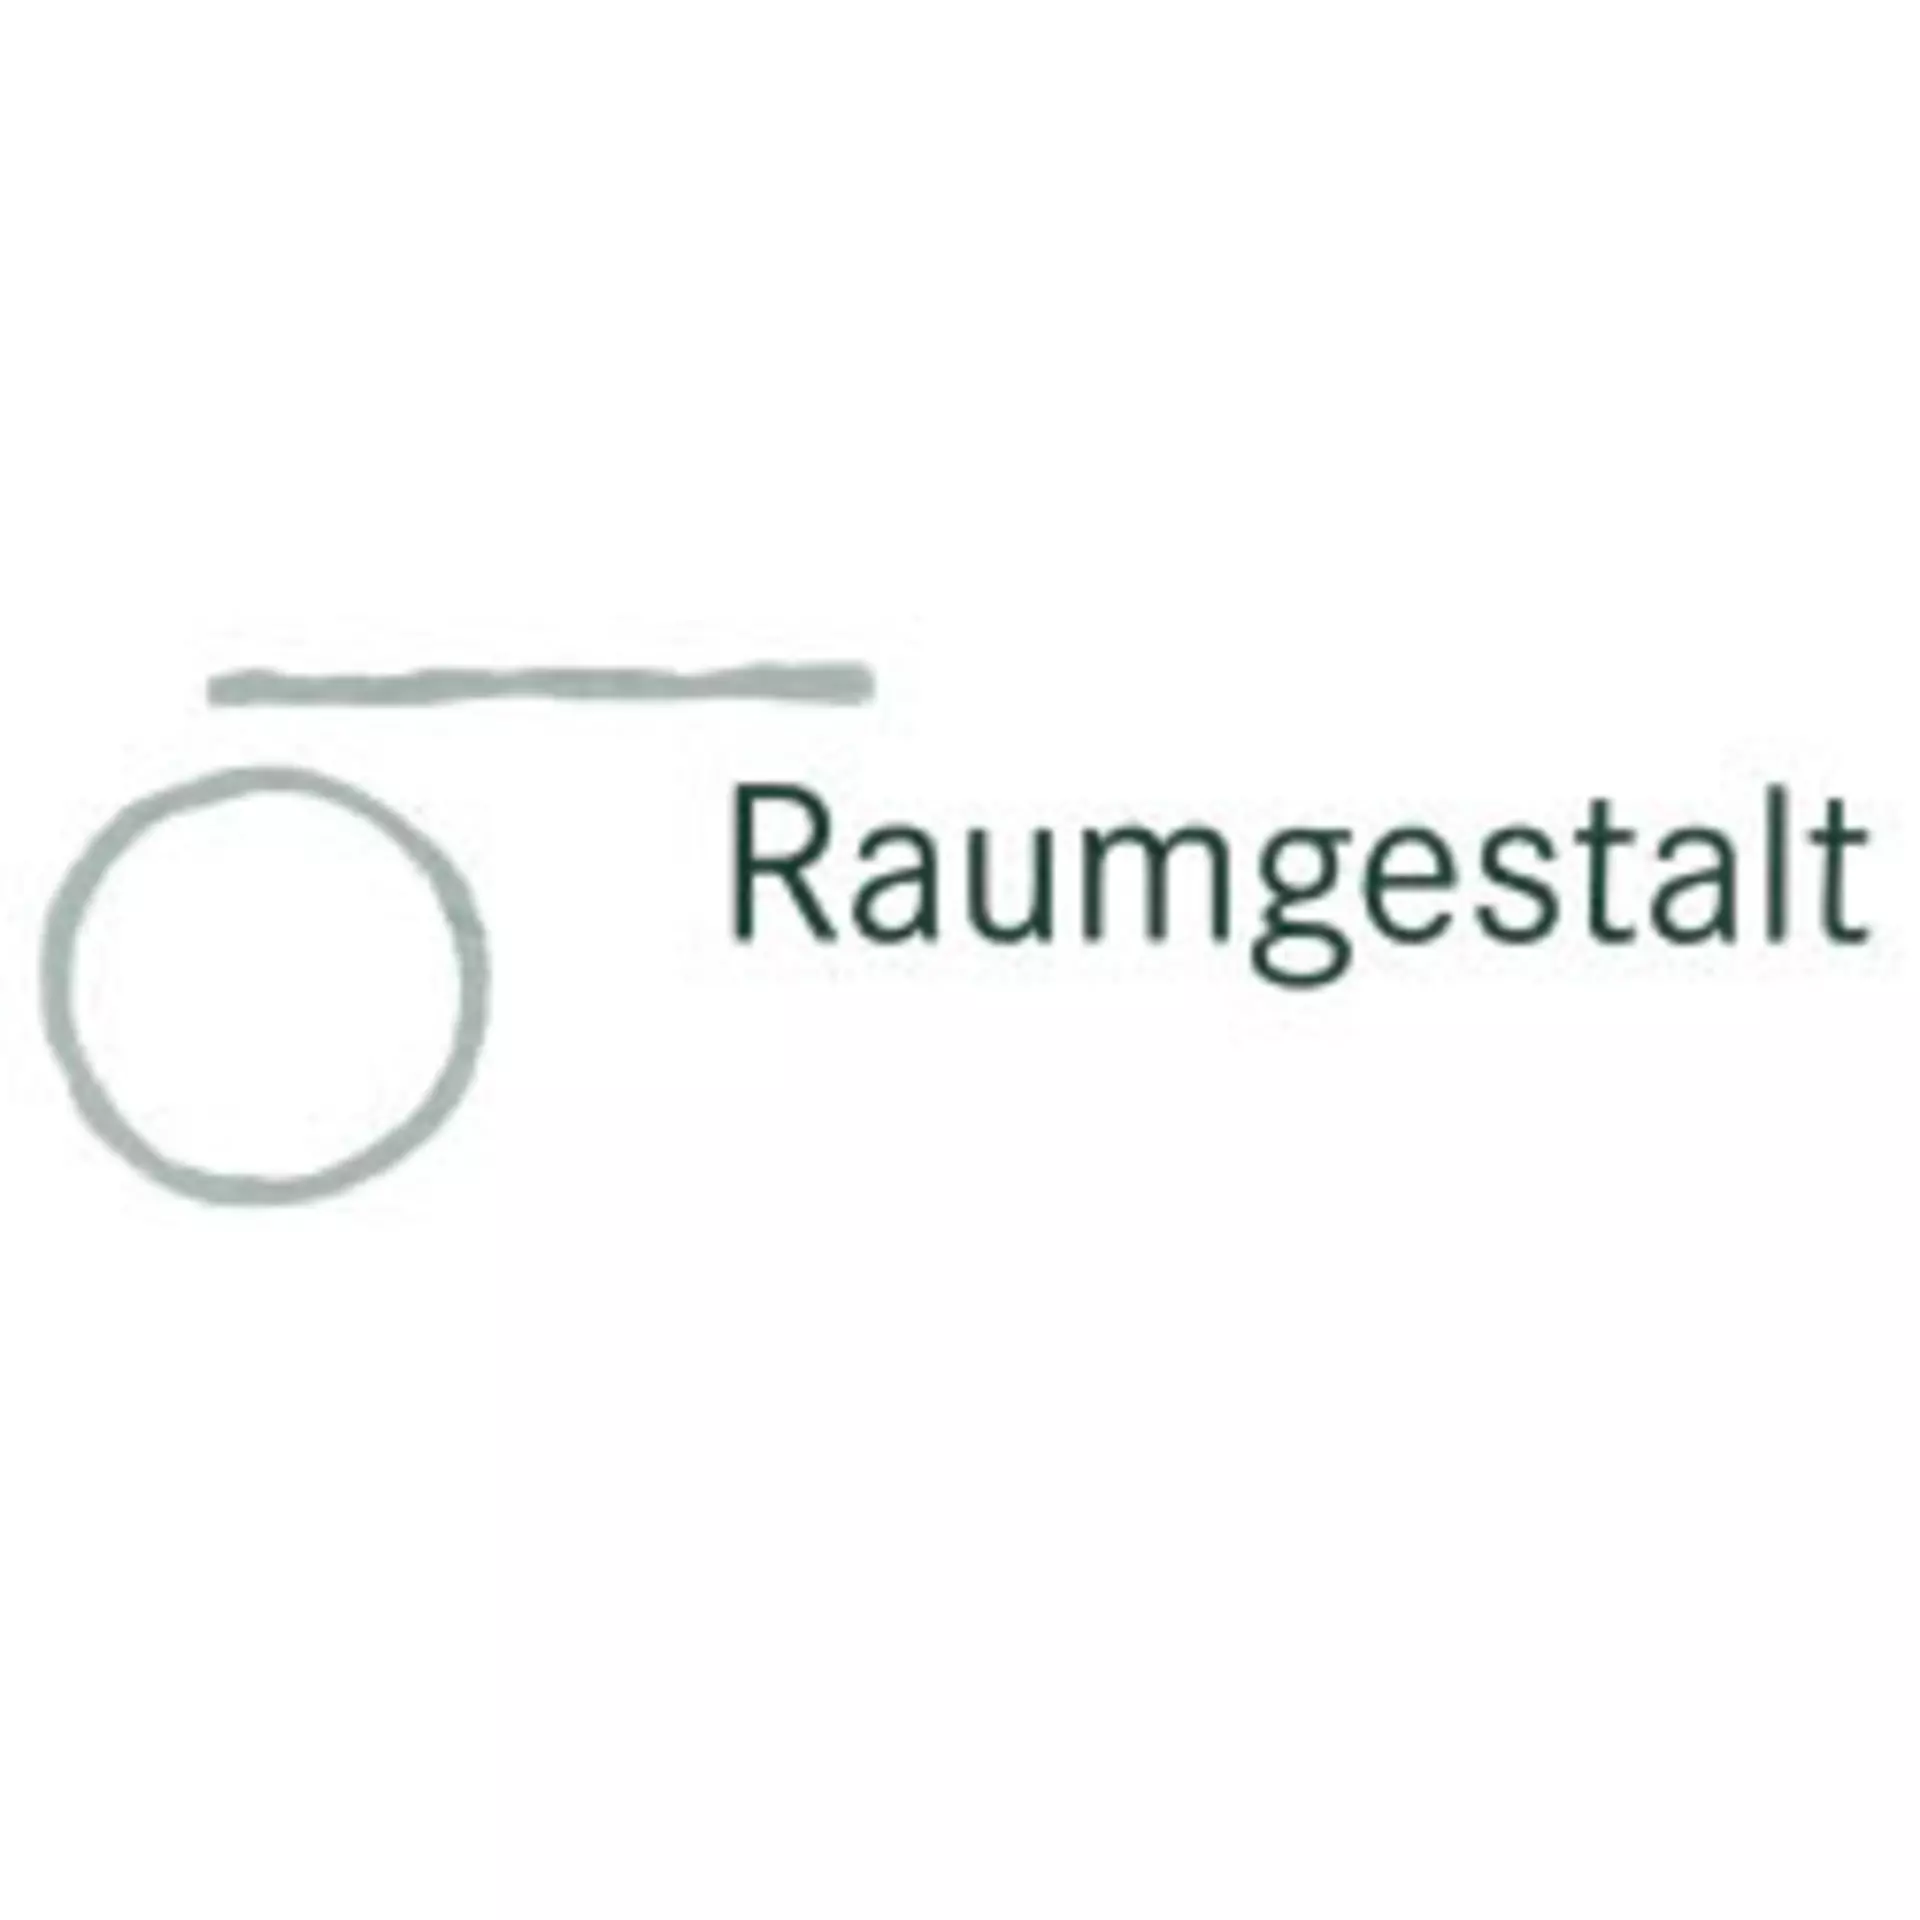 Logo Raumgestalt